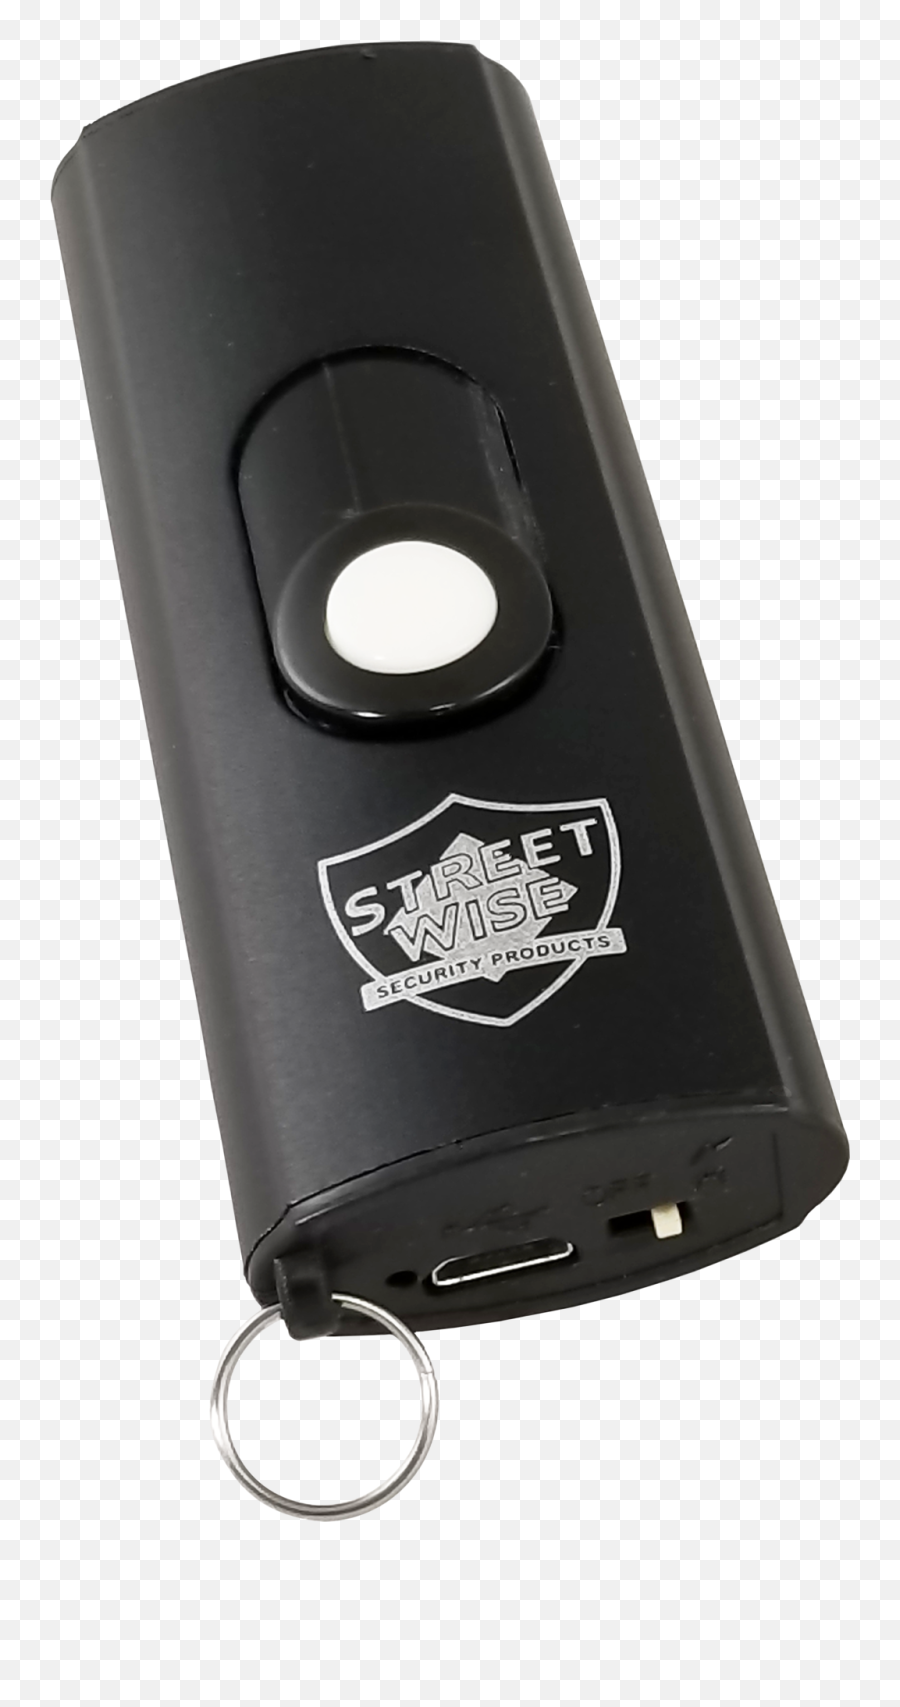 Streetwise Usb Key - Chain Stun Gun Black Portable Emoji,Emoji Keychain Amazon